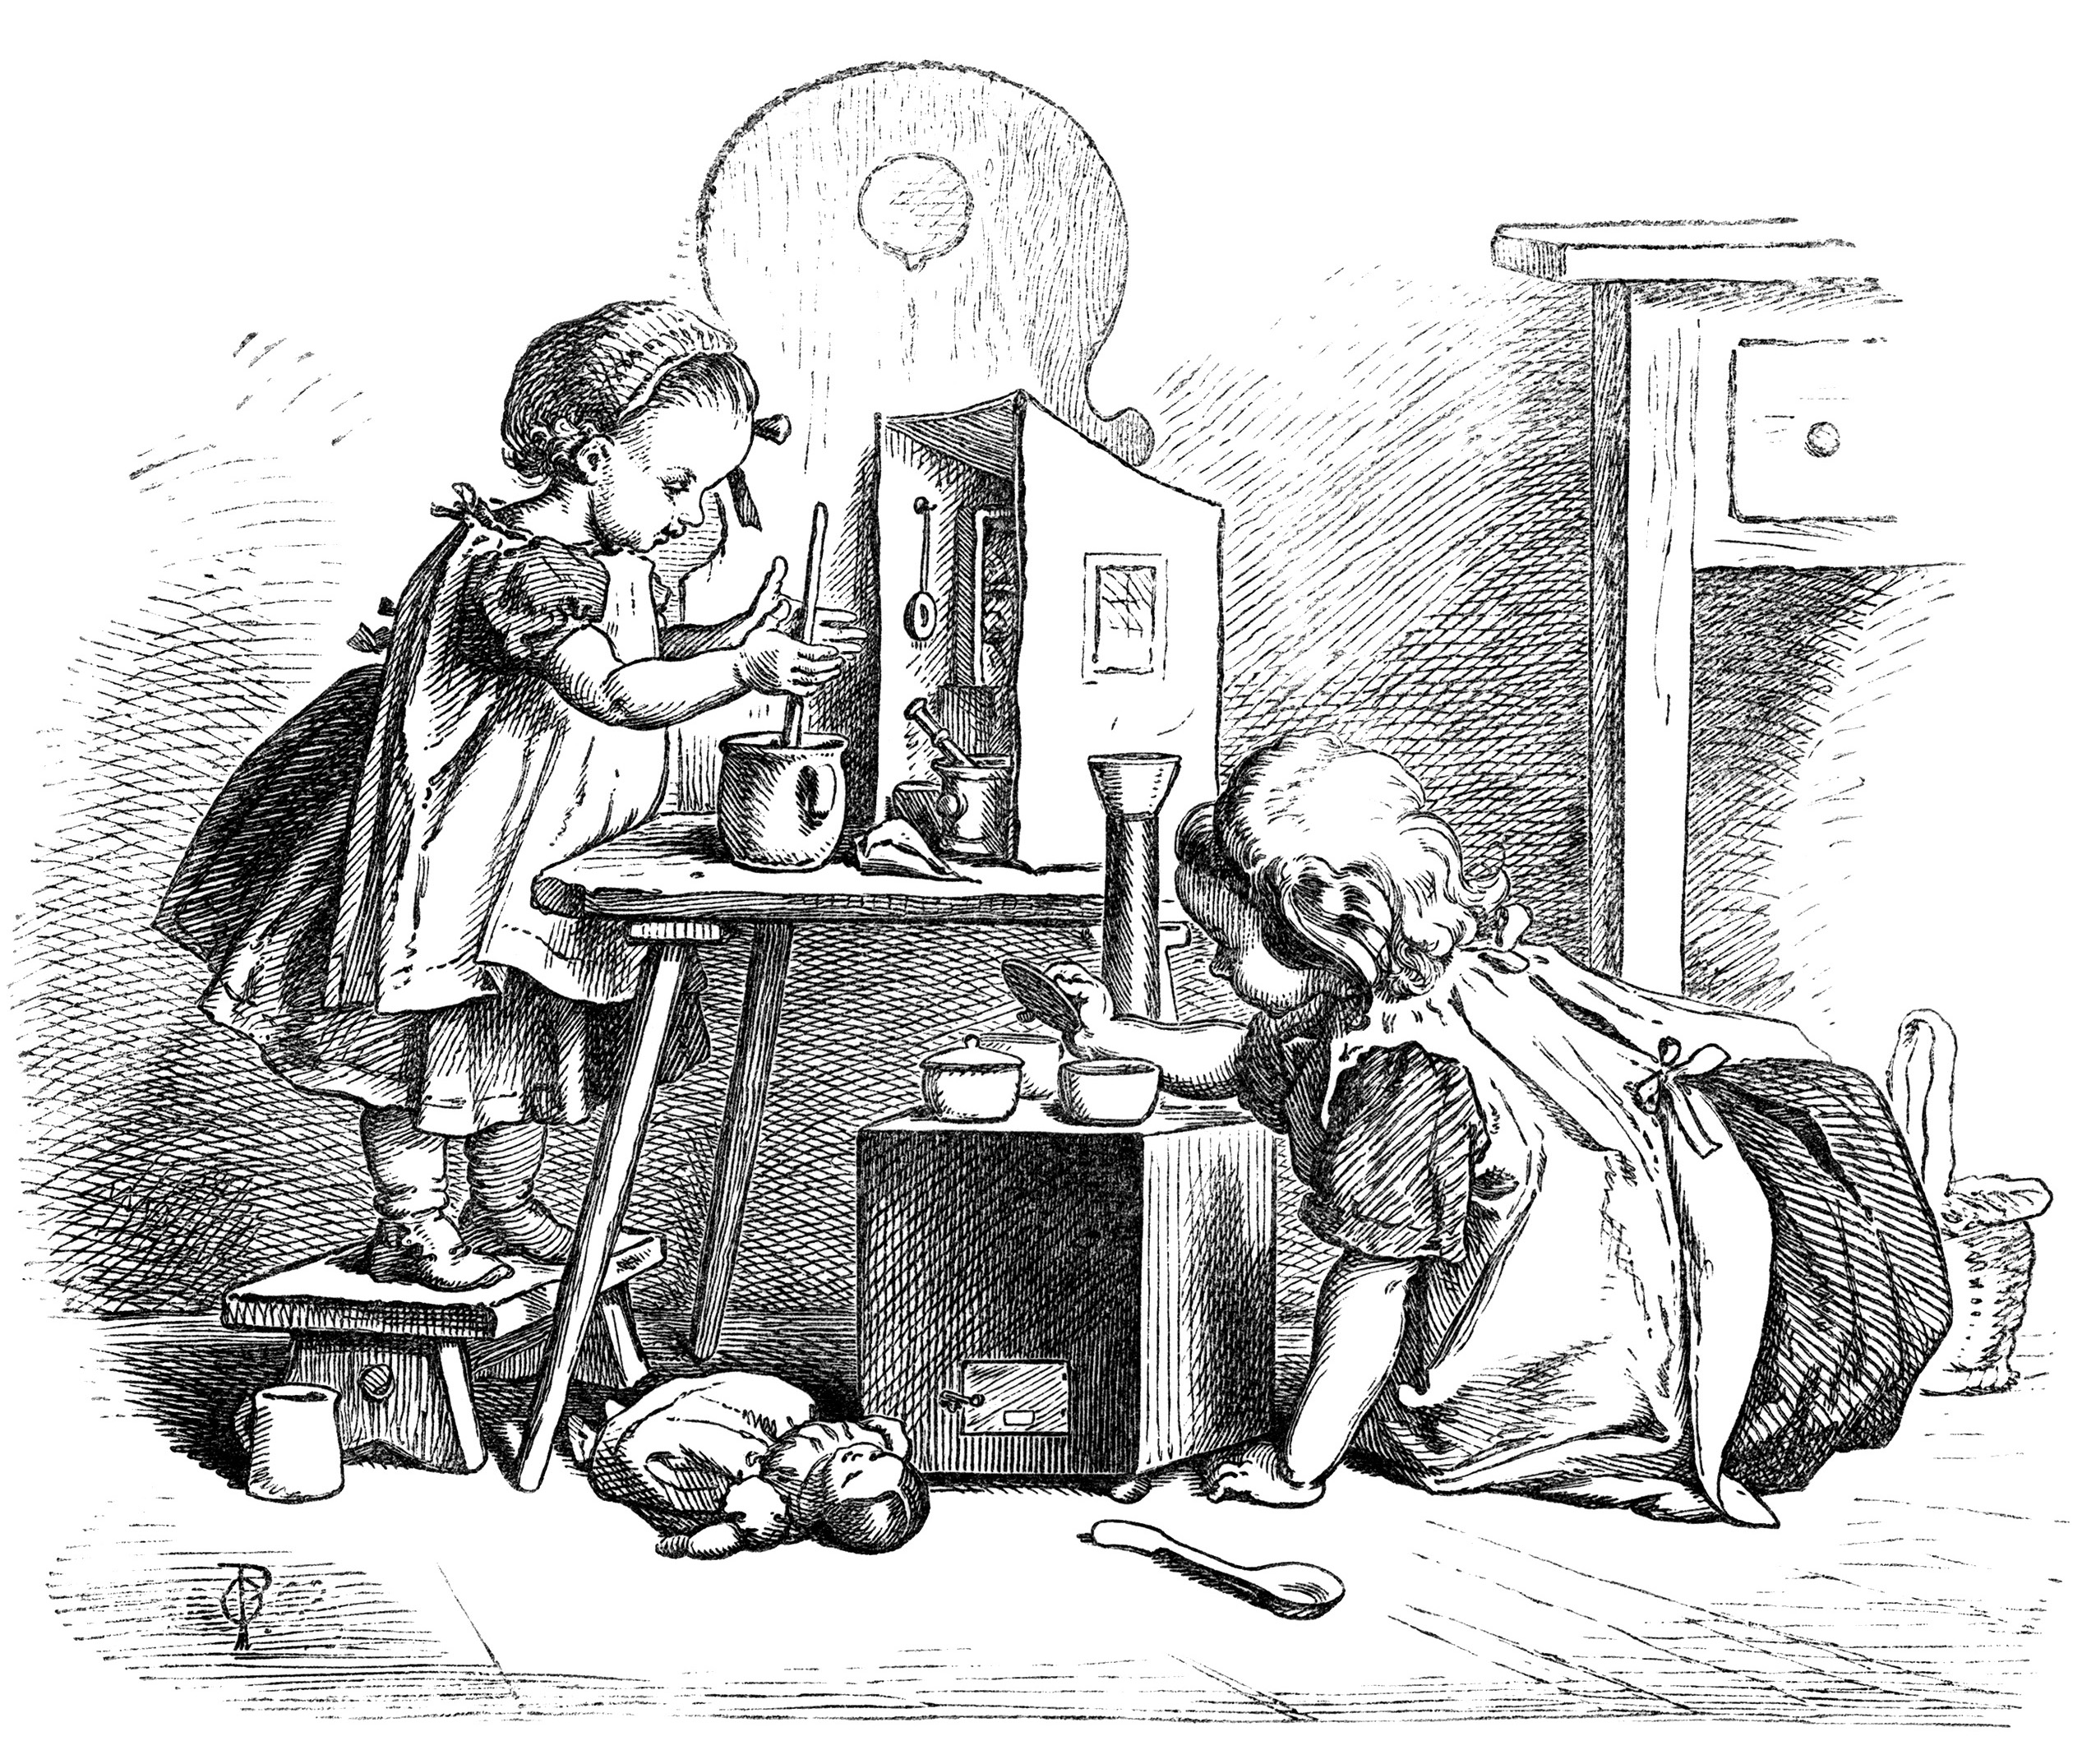 black and white clip art, Oscar pletsch engraving, Victorian girls printable, little cooks storybook illustration, girls cooking clip art, vintage children in kitchen image